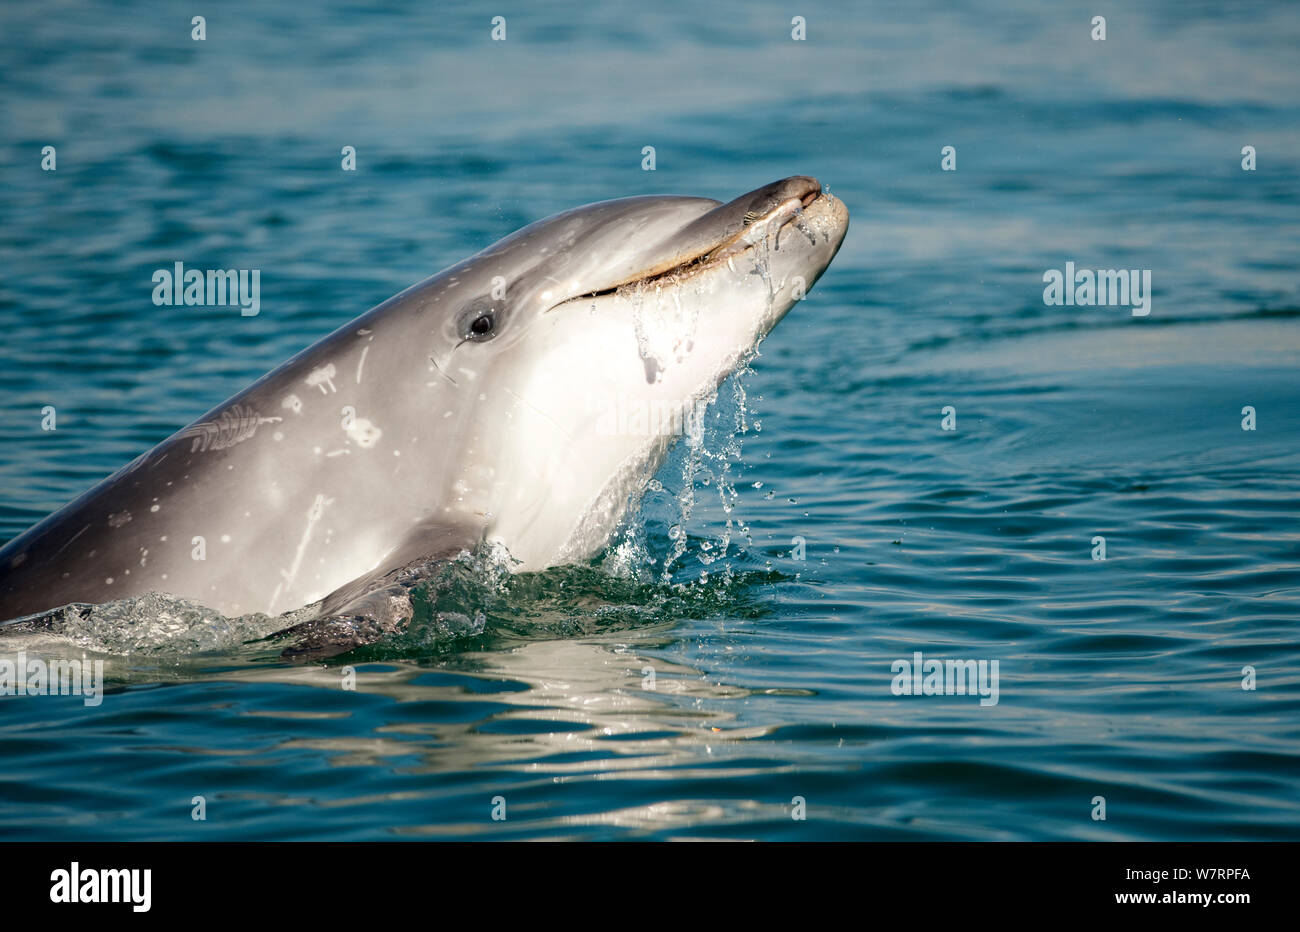 Bottlenose Dolphin (Tursiops truncatus) playing near surface, Sado Estuary, Portugal Stock Photo